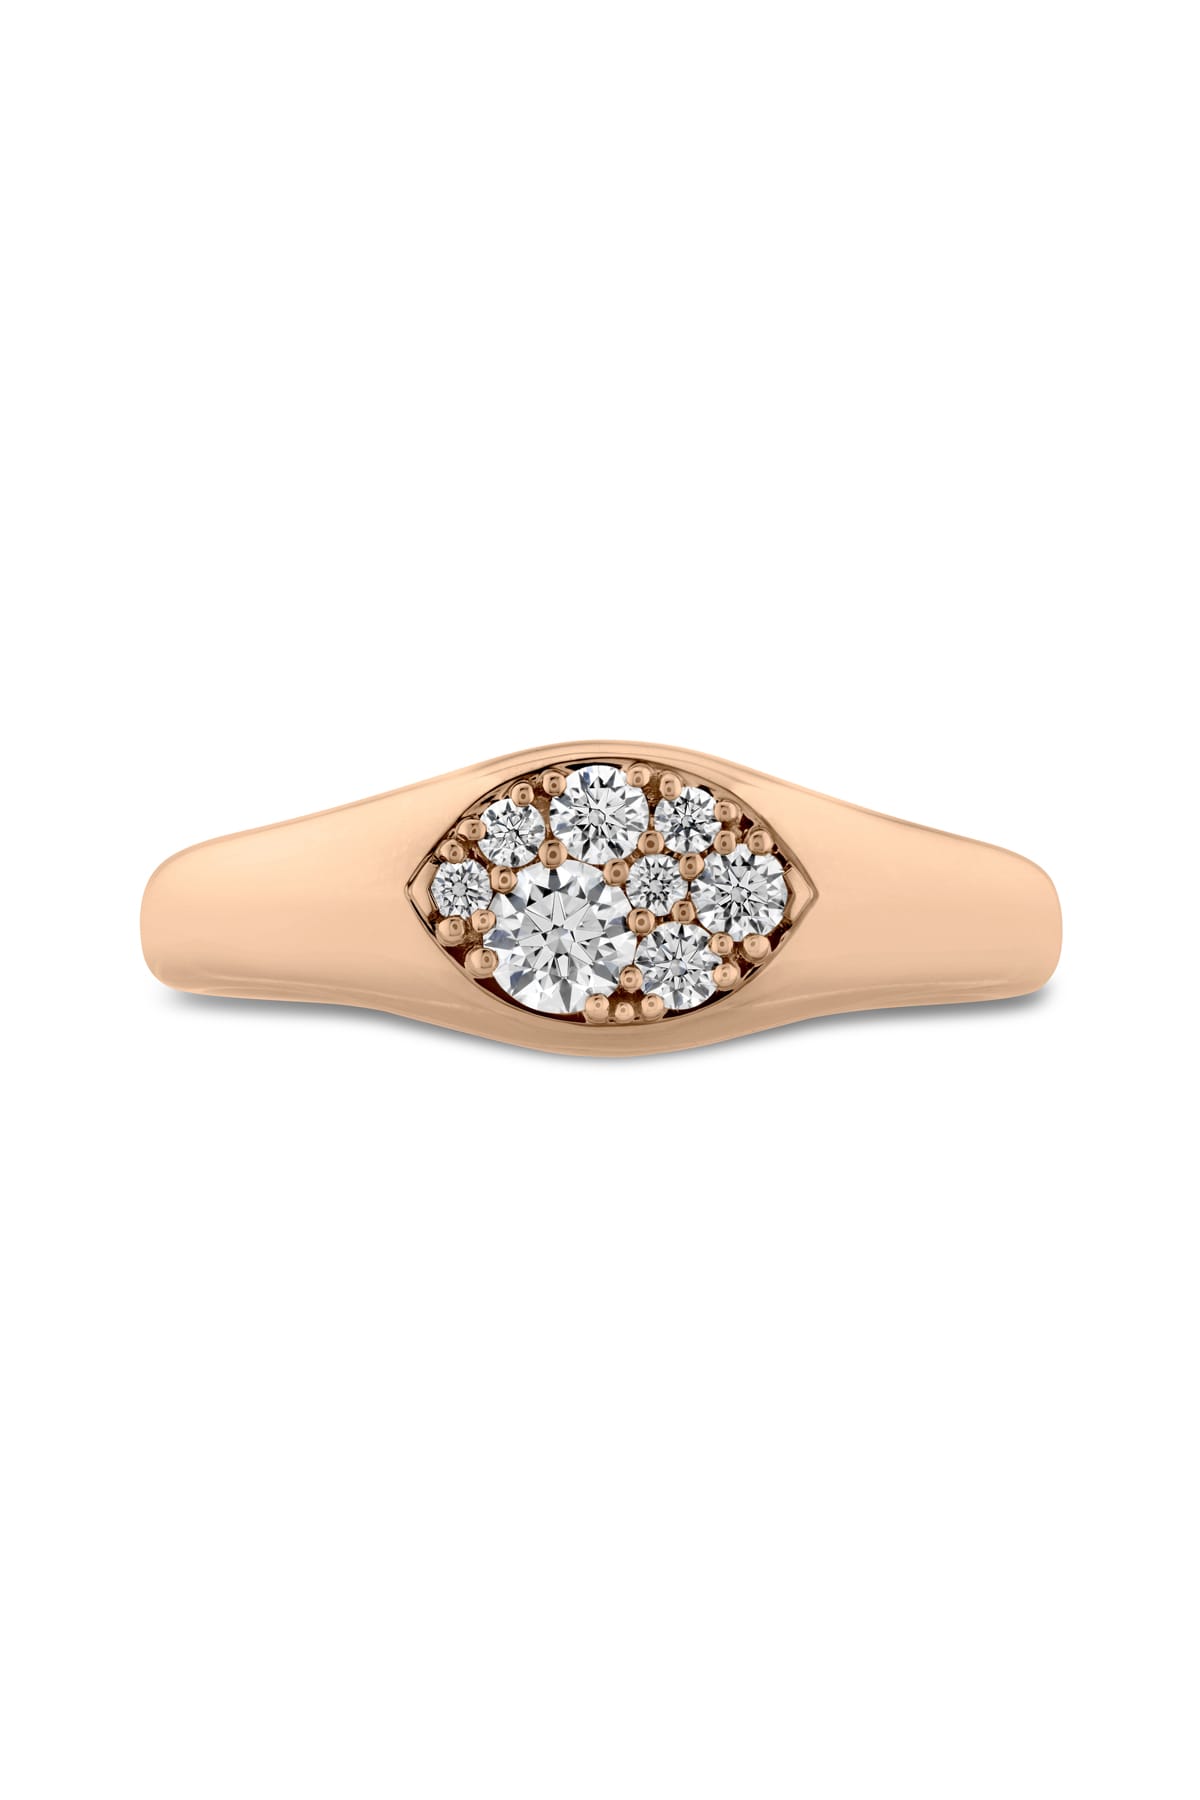 Diamond Moon Diamond Signet Ring Design For Women | Danelian Jewelry